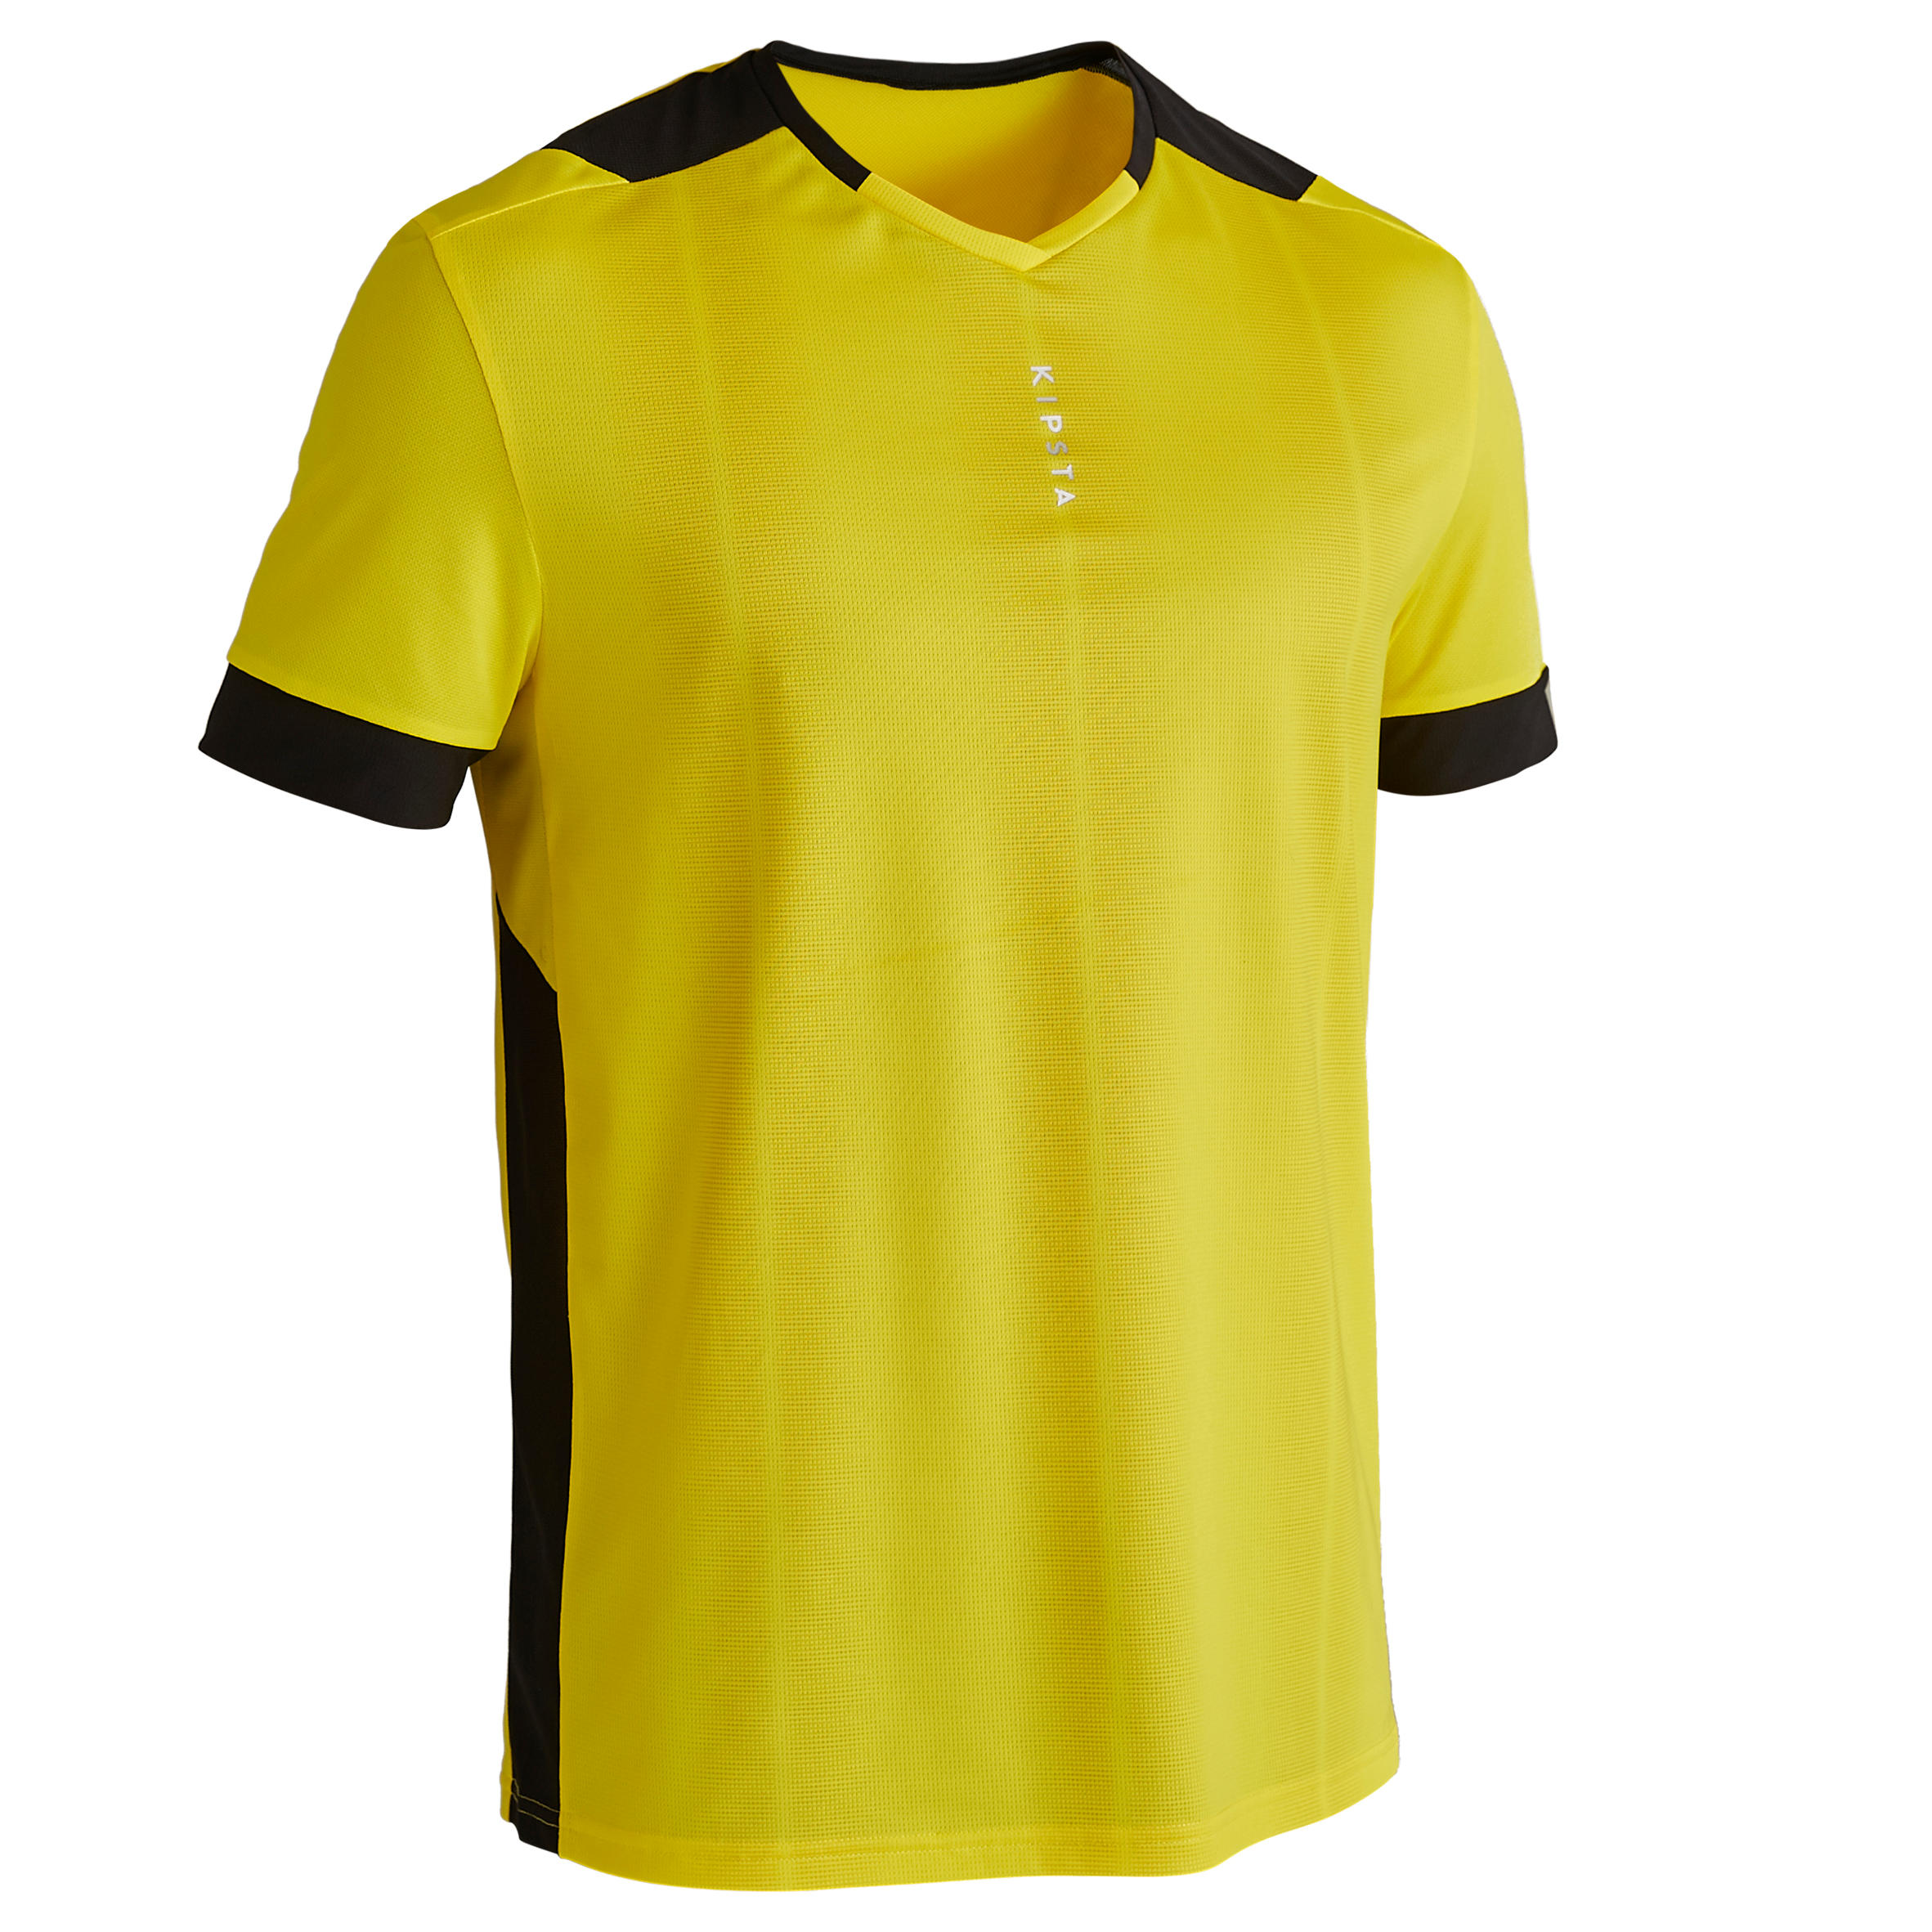 KIPSTA F500 Adult Football Jersey - Yellow